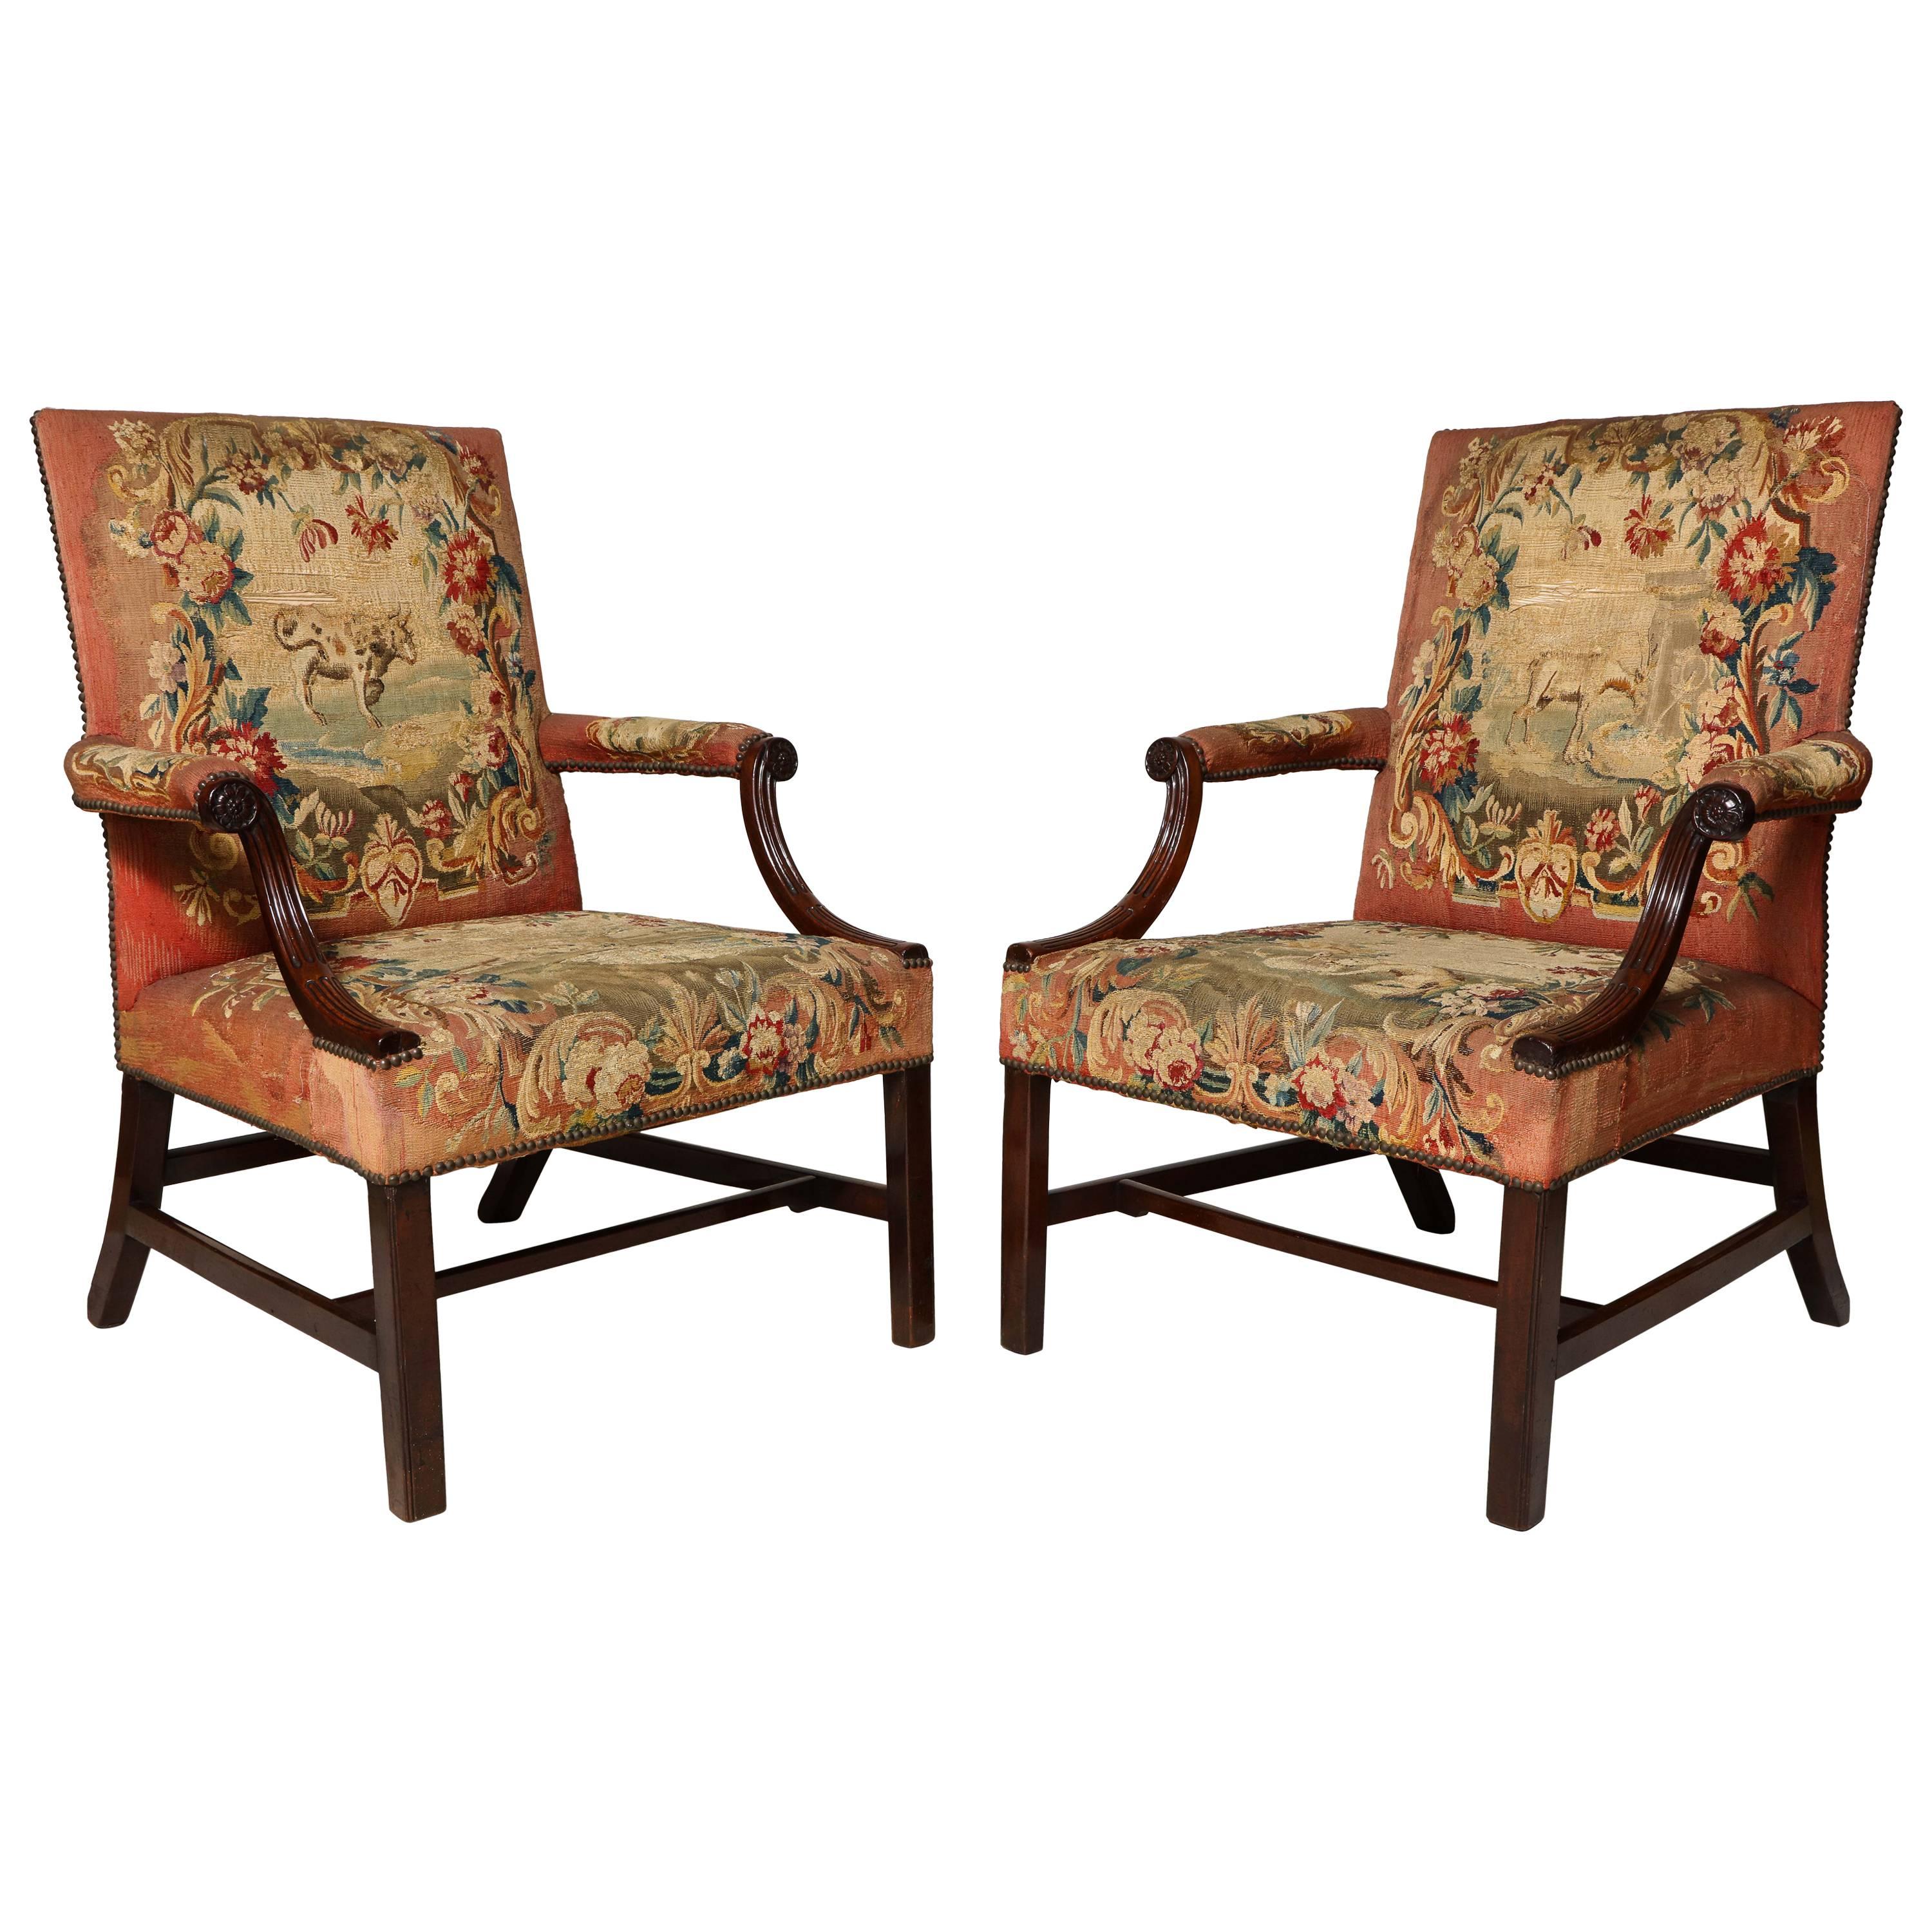 Beautiful Pair of Georgian Gainsborough Chairs